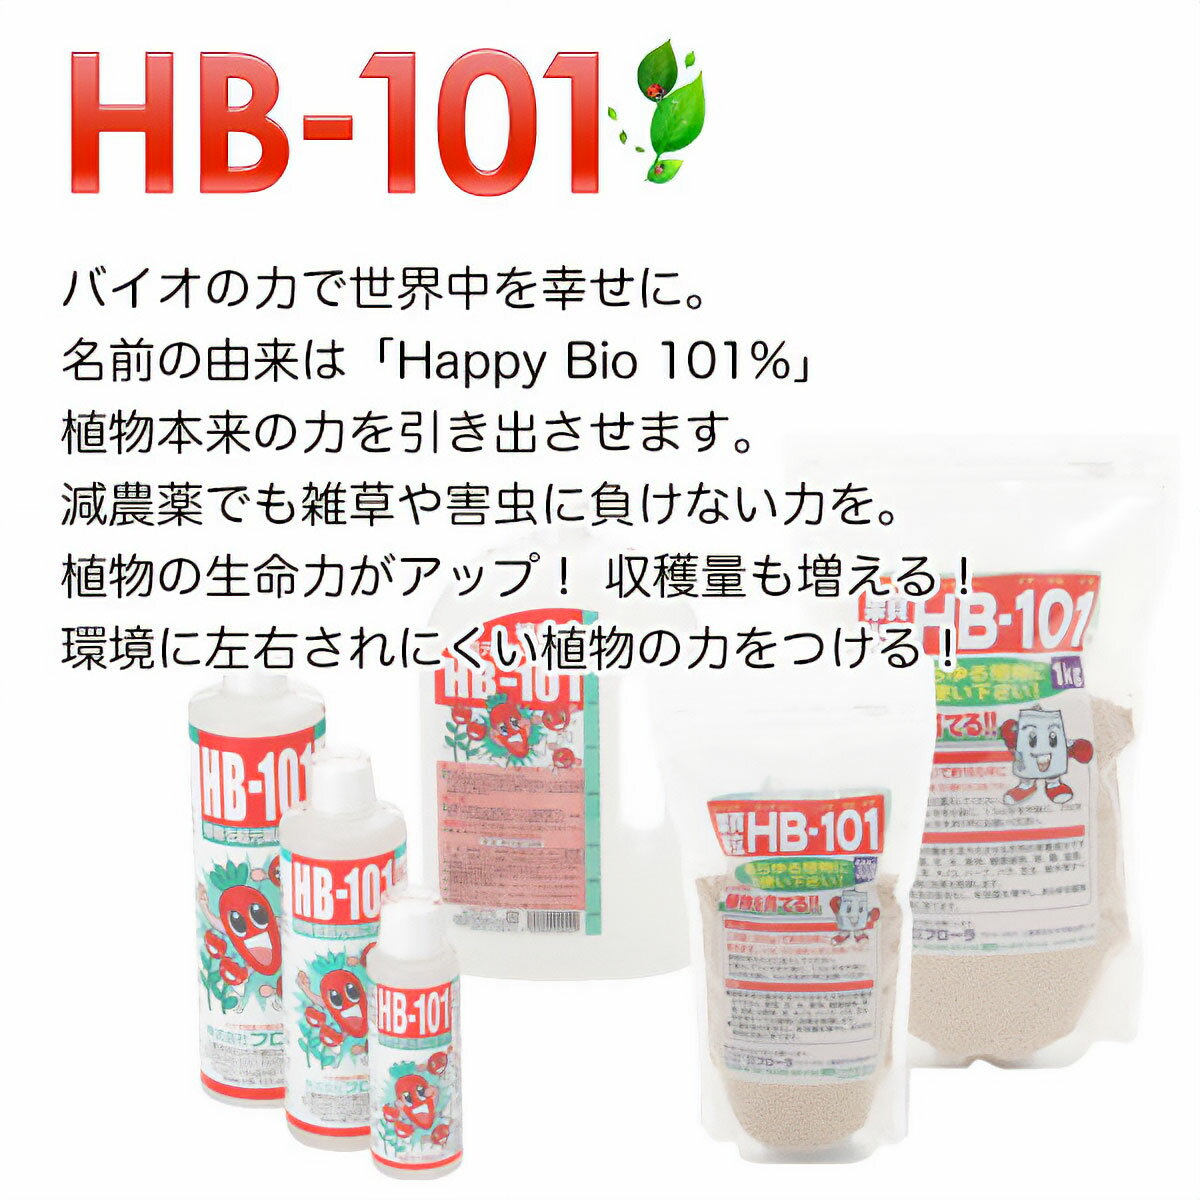 HB-101 1L フローラ 植物を超元気にする 活力液 3